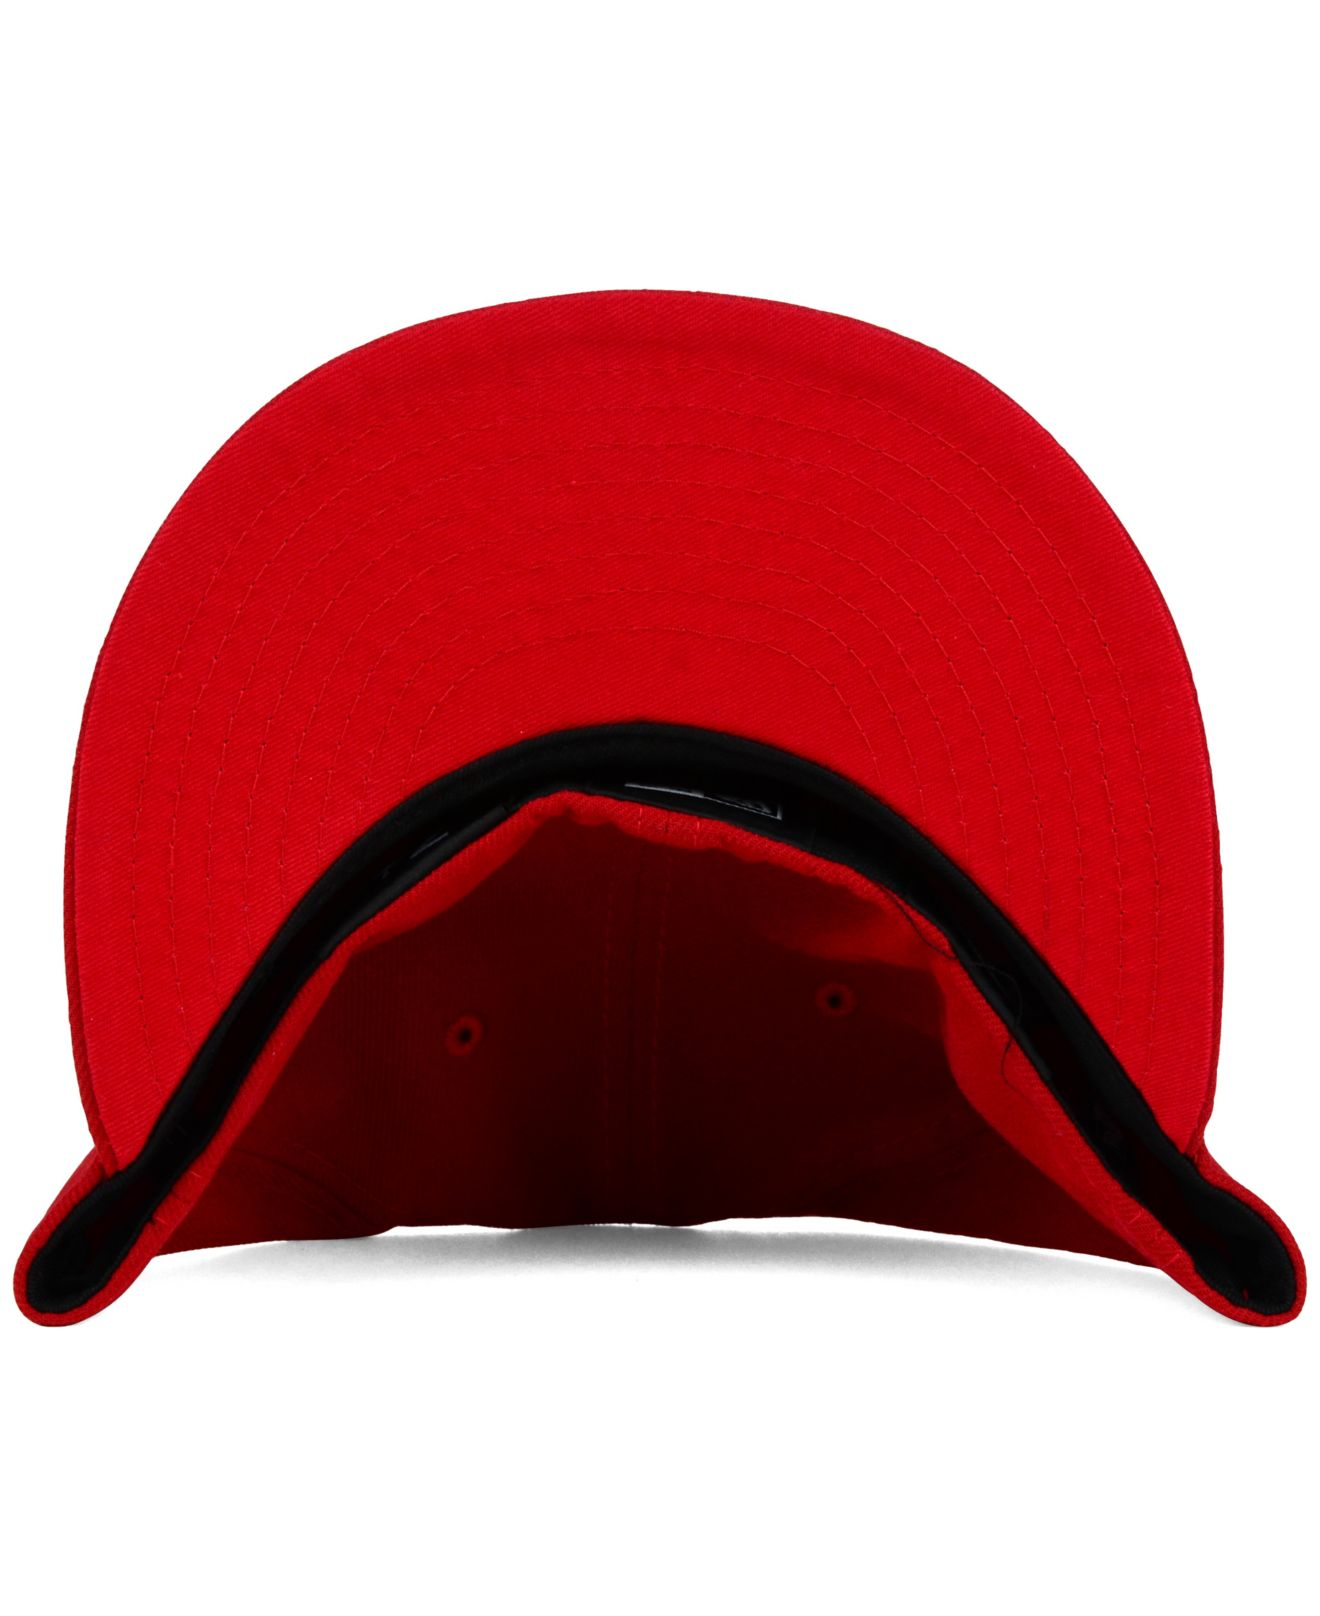 KTZ St. Louis Cardinals C-dub 9fifty Snapback Cap in Blue for Men